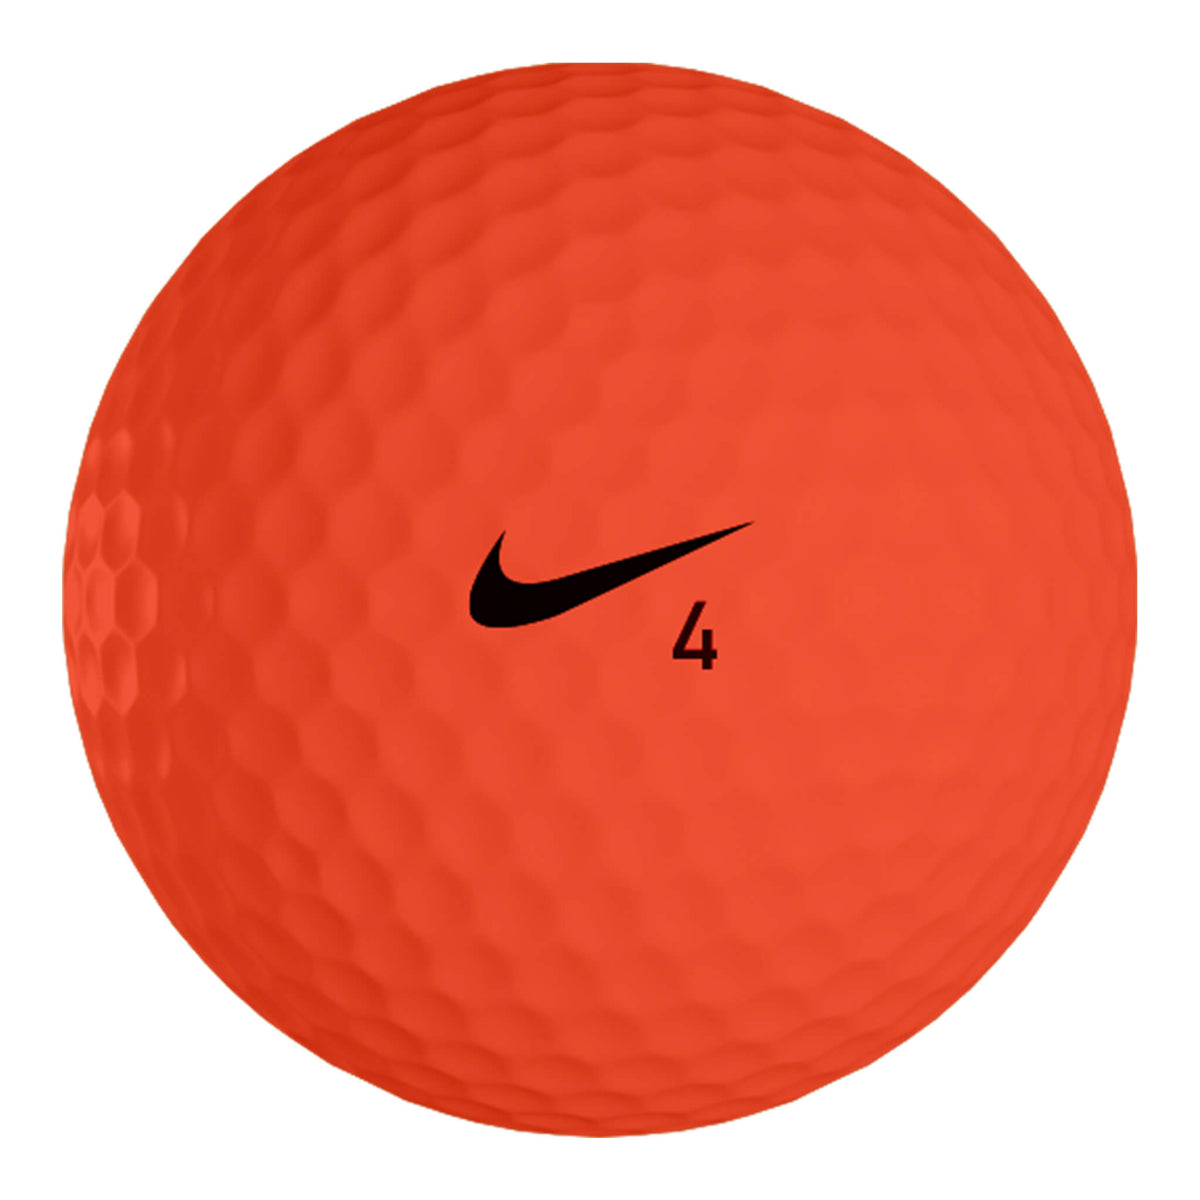 Nike PD Soft Orange